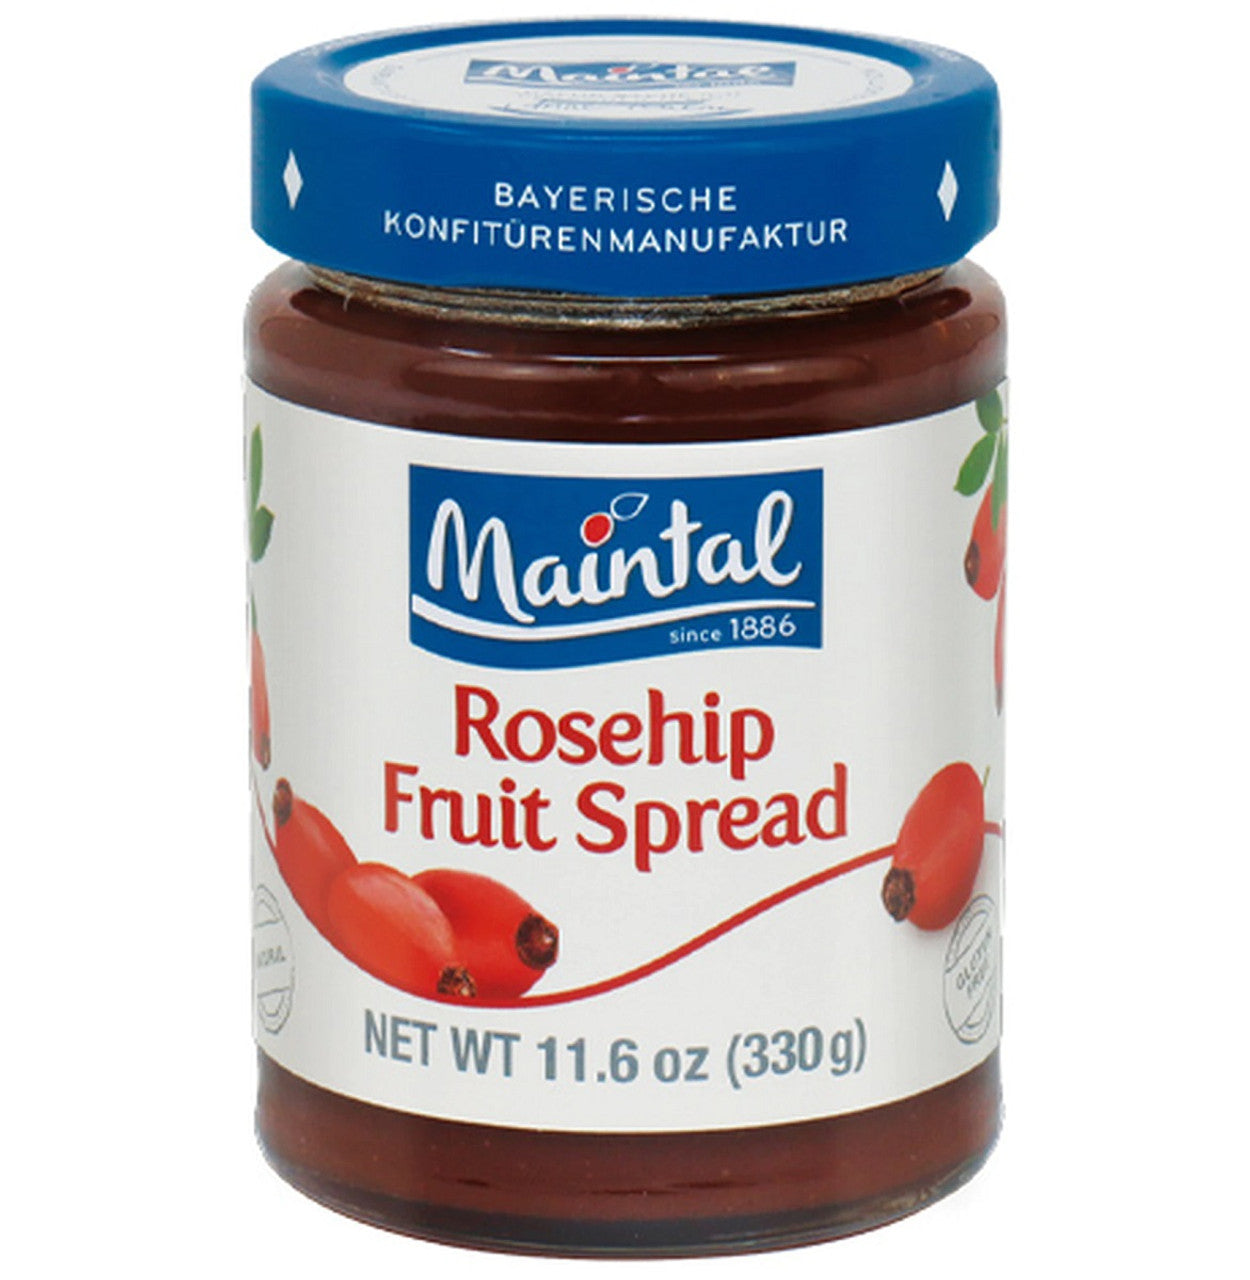 Maintal Rosehip Fruit Spread, 330g